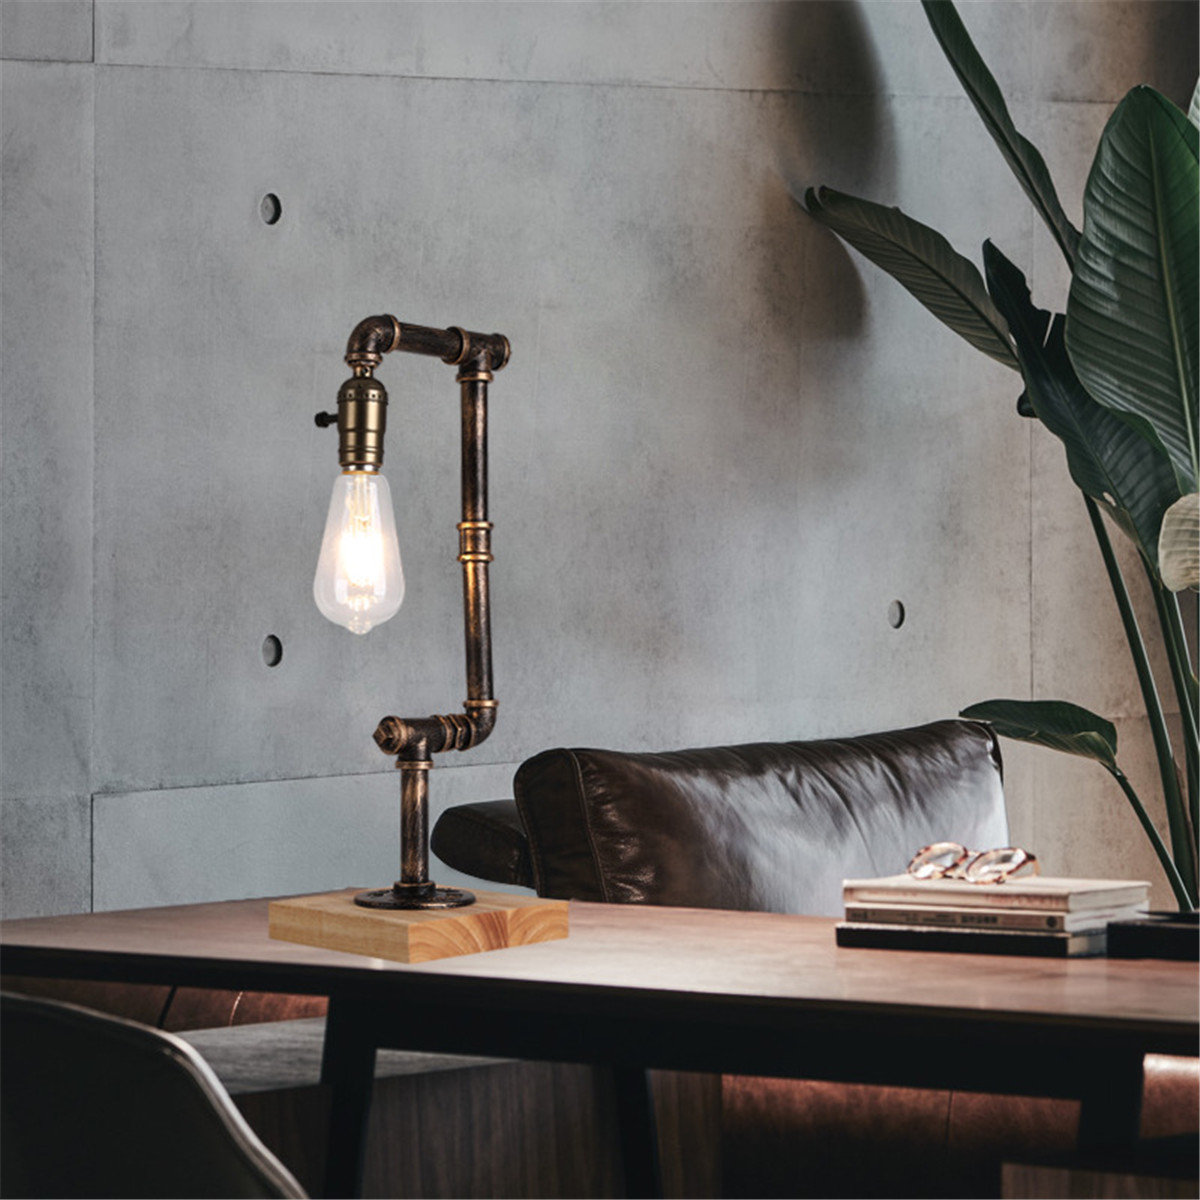 E26-Industrial-Retro-Iron-Wooden-Table-Lamp-Living-Room-Bedside-Light-Decor-1685674-1